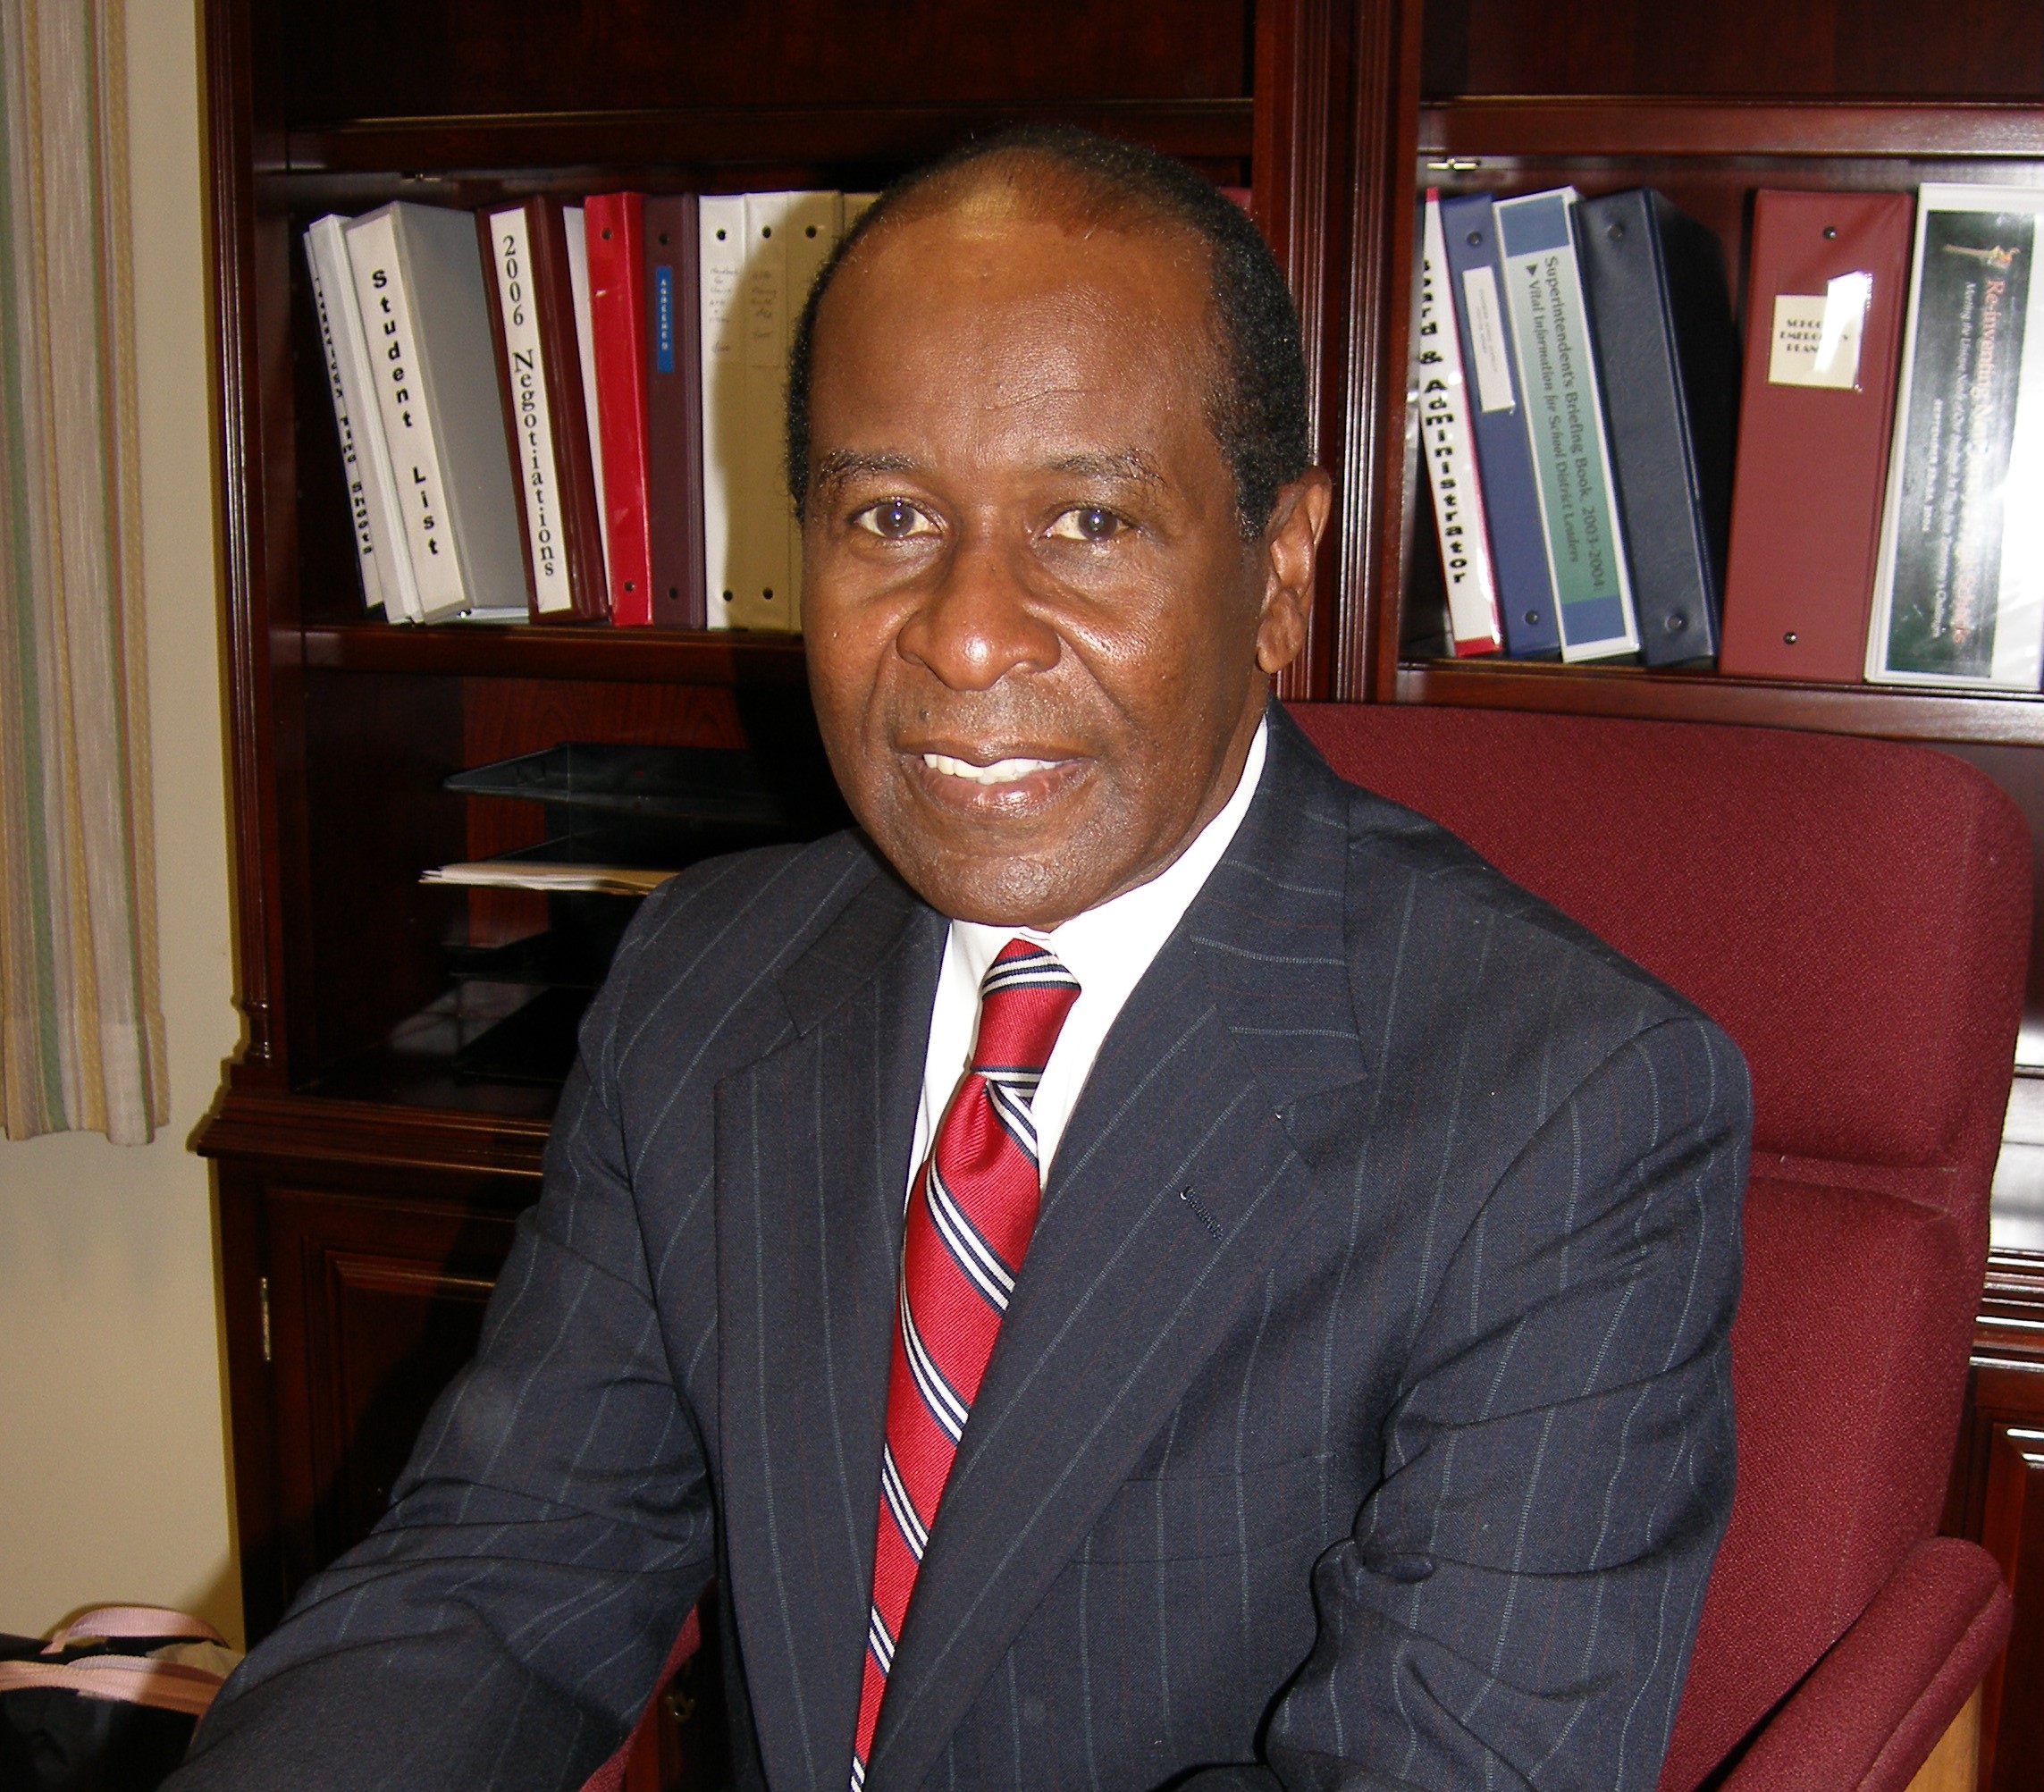 Leonard D. Fitts is the interim superintendent of the Moorestown School District in Moorestown, New Jersey